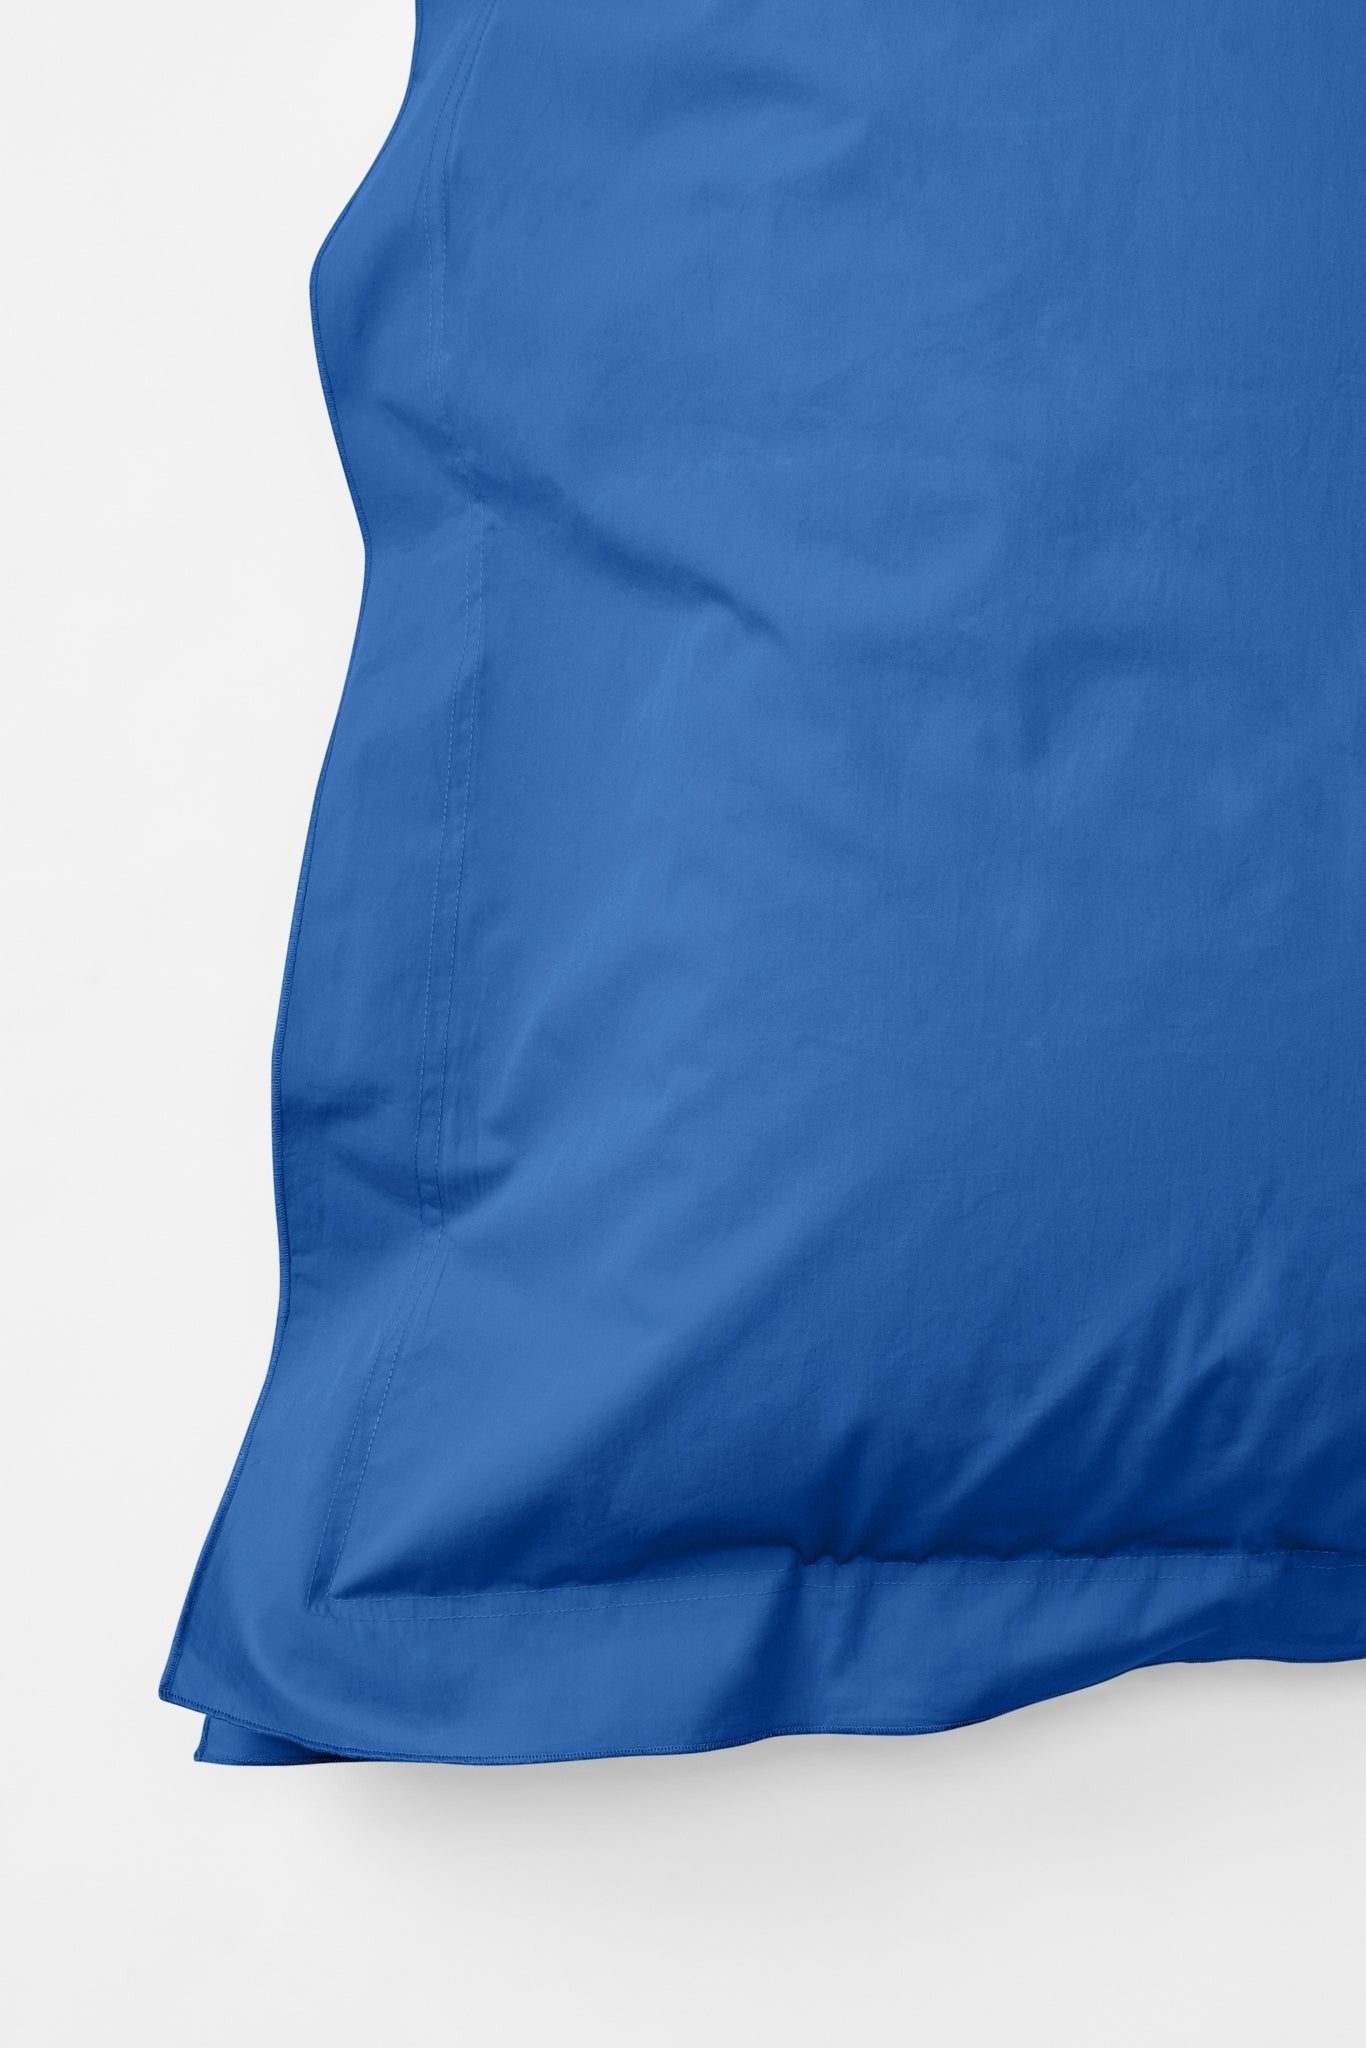 Mono Organic Cotton Percale Pillow Pair - Blue Blue Pillows in King Pillow